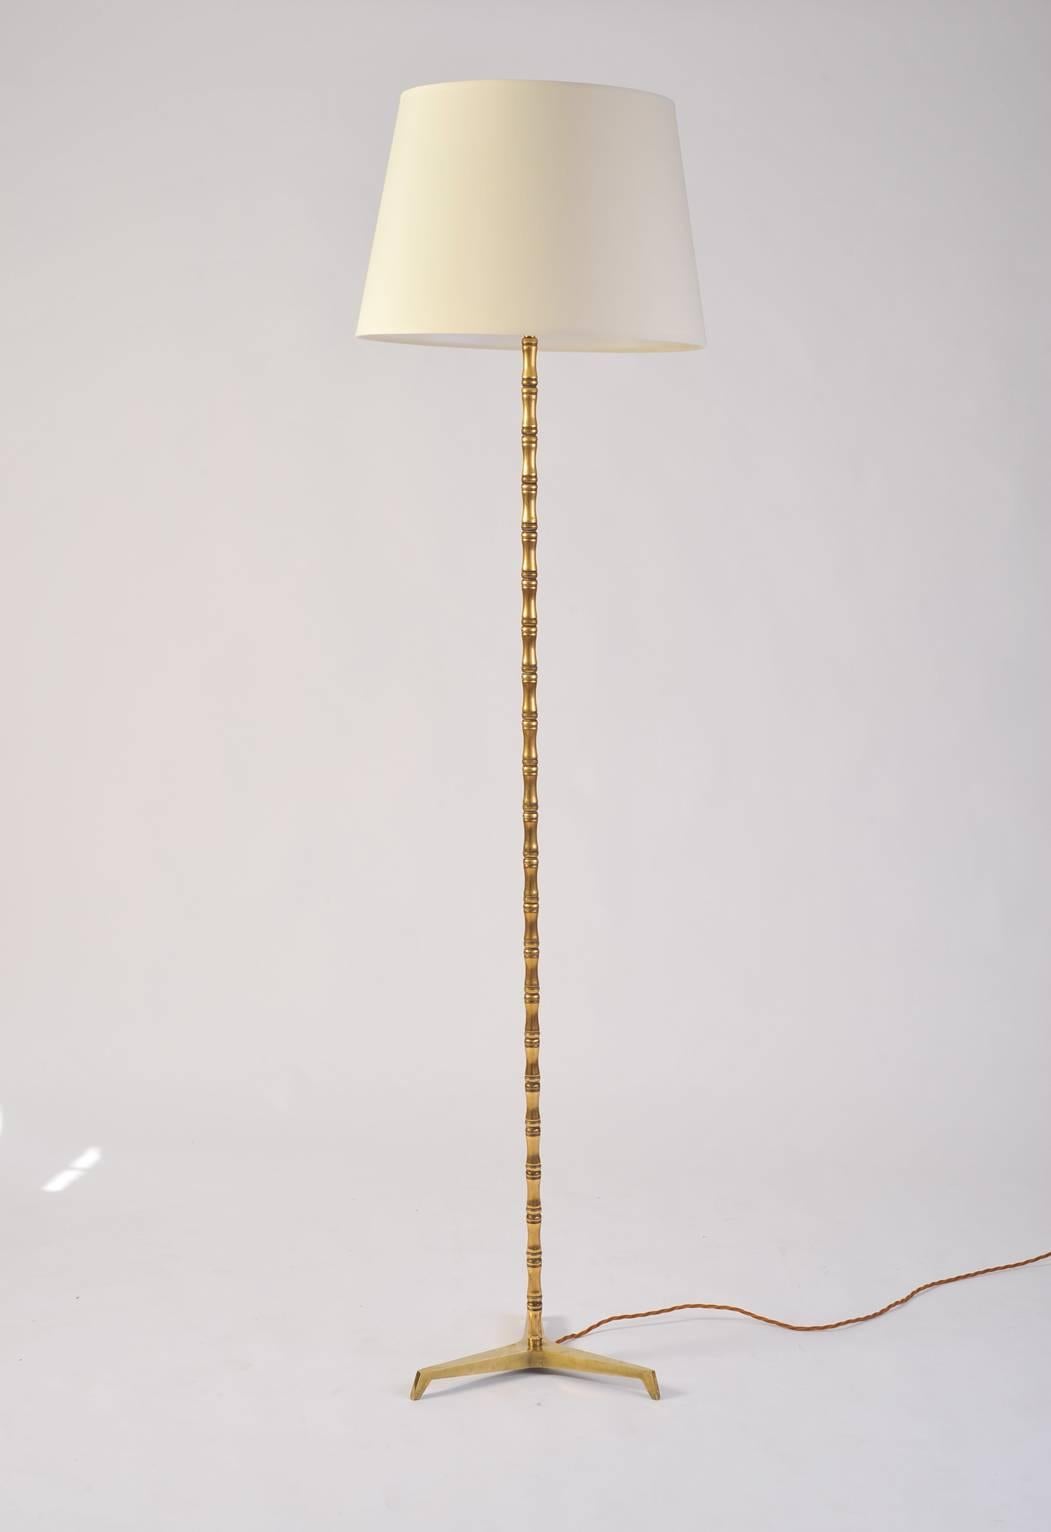 A tall stylised bamboo floor lamp.
France, circa 1950.